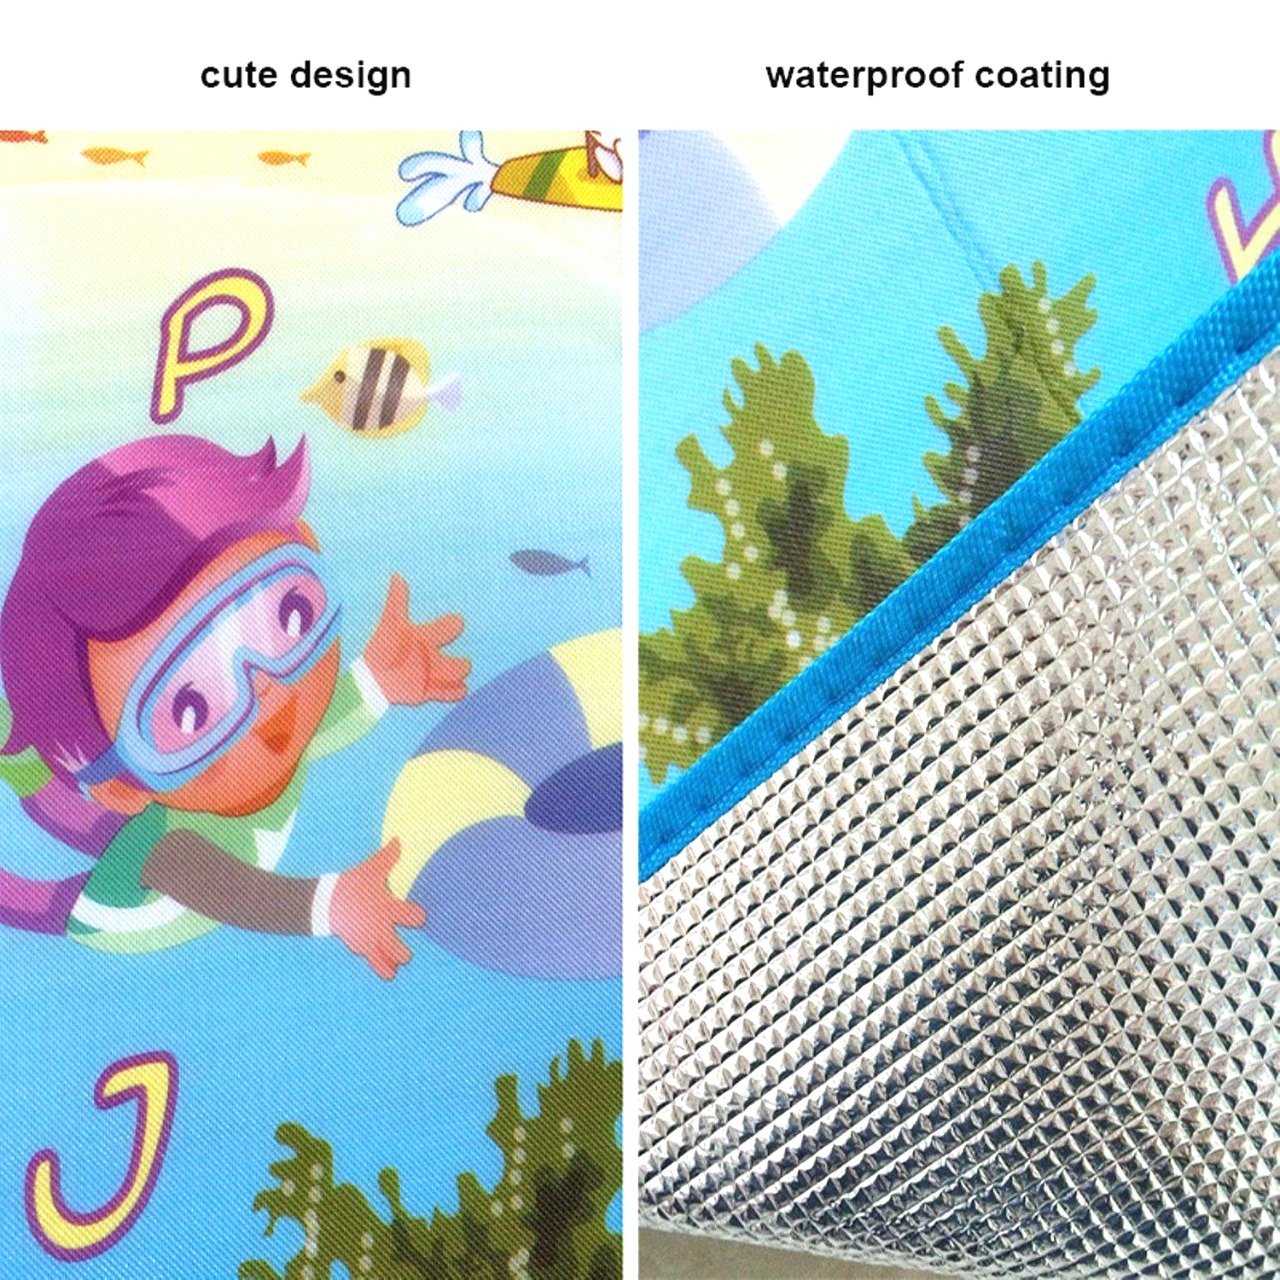 1200 Waterproof Single Side Baby Play Crawl Floor Mat for Kids Picnic School Home (Size 180 x 115) DeoDap